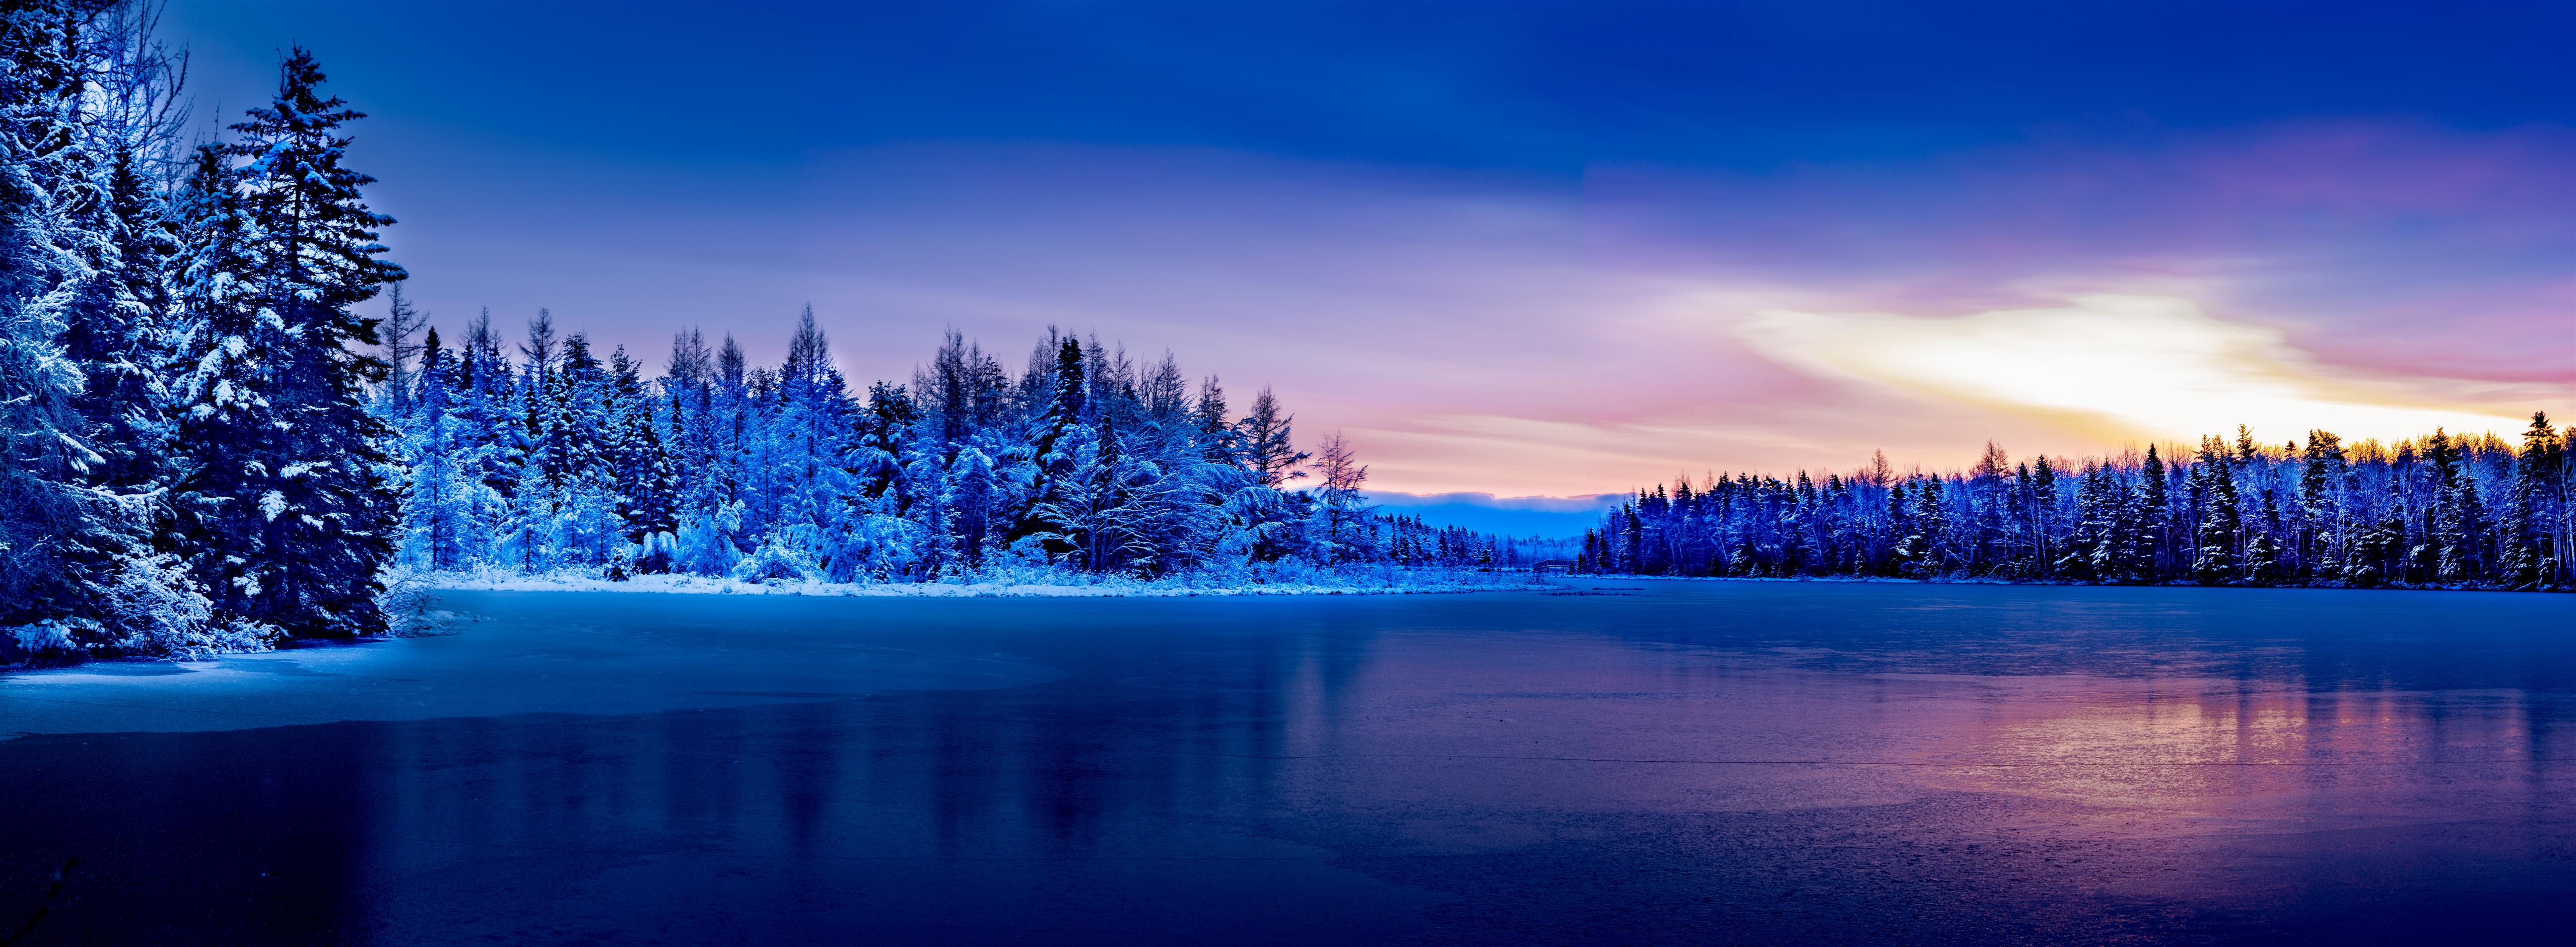 body of water surrounded by pine trees covered in snow under blue sky, irishtown, irishtown, HD wallpaper